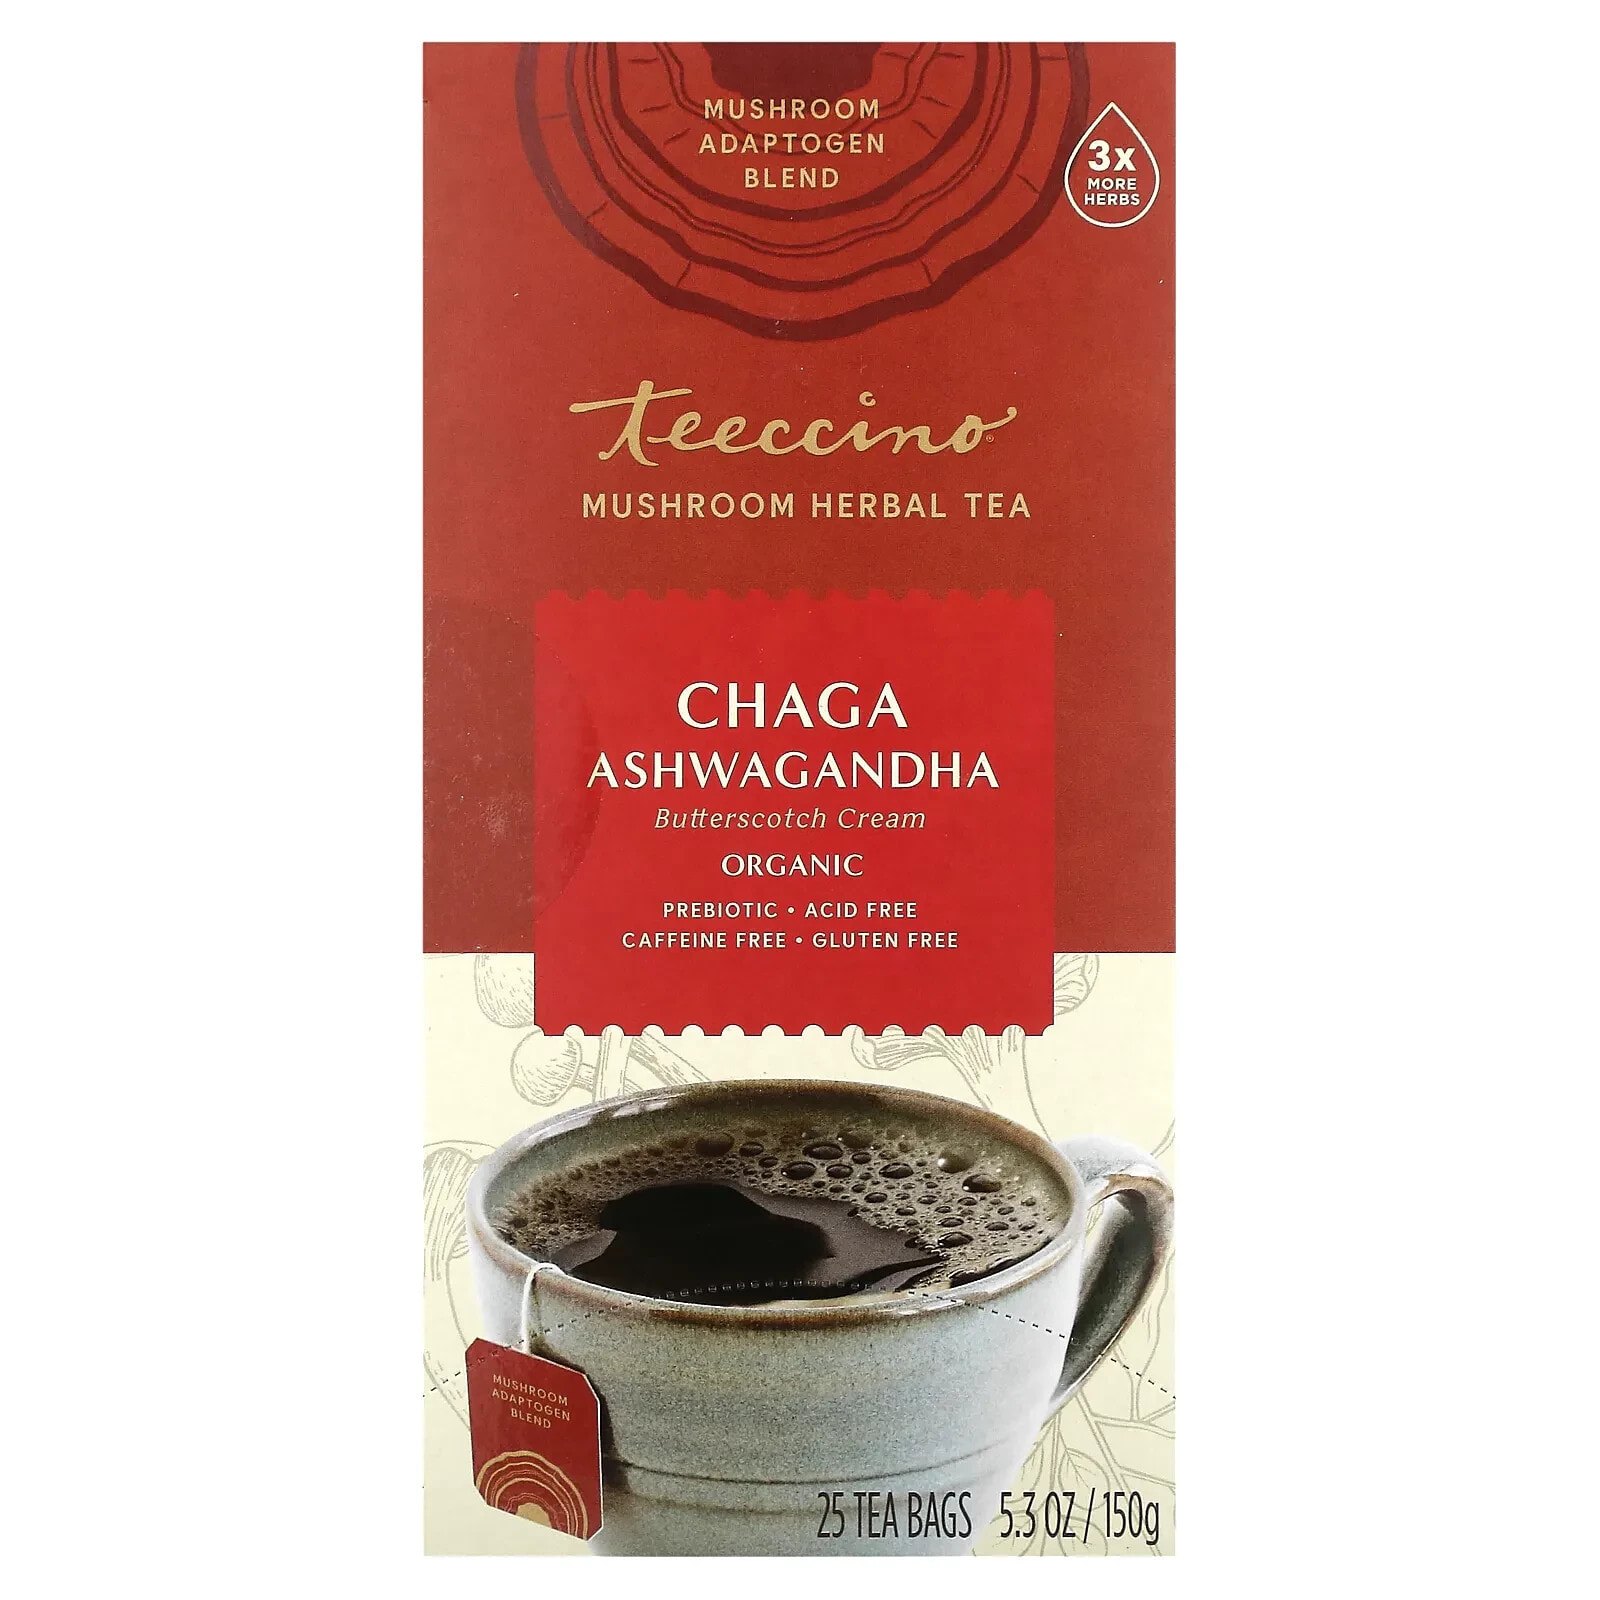 Mushroom Herbal Tea, Cordyceps Schisandra, Caffeine Free, 10 Tea Bags, 2.12 oz (60 g)